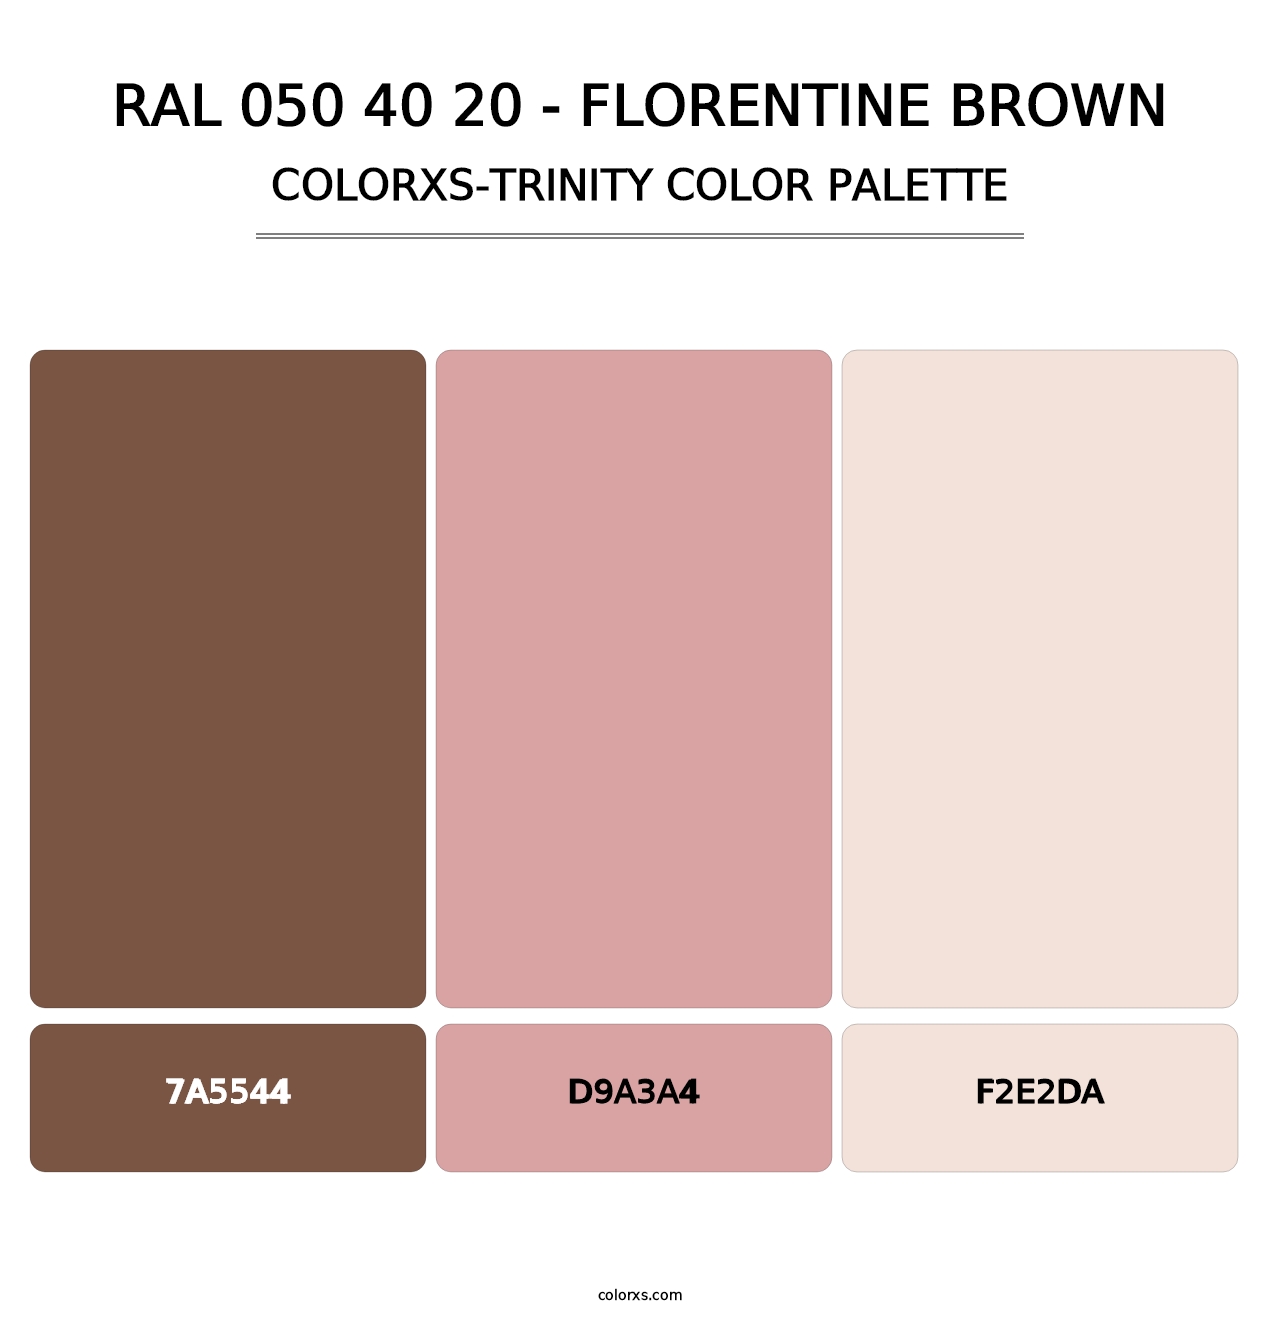 RAL 050 40 20 - Florentine Brown - Colorxs Trinity Palette